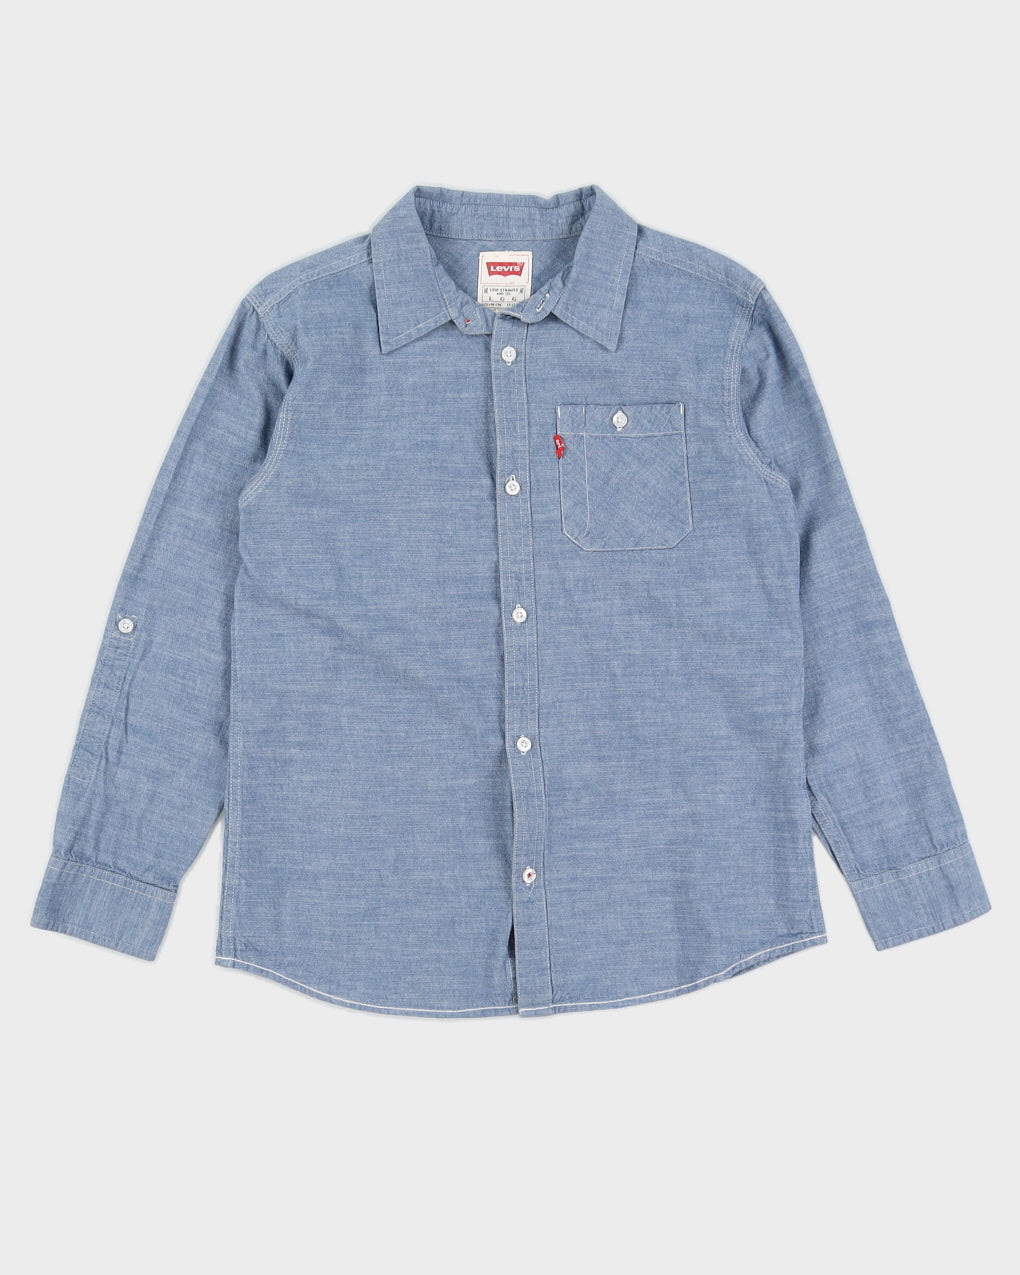 Youth Blue Denim Levi's Button-Up Work Shirt